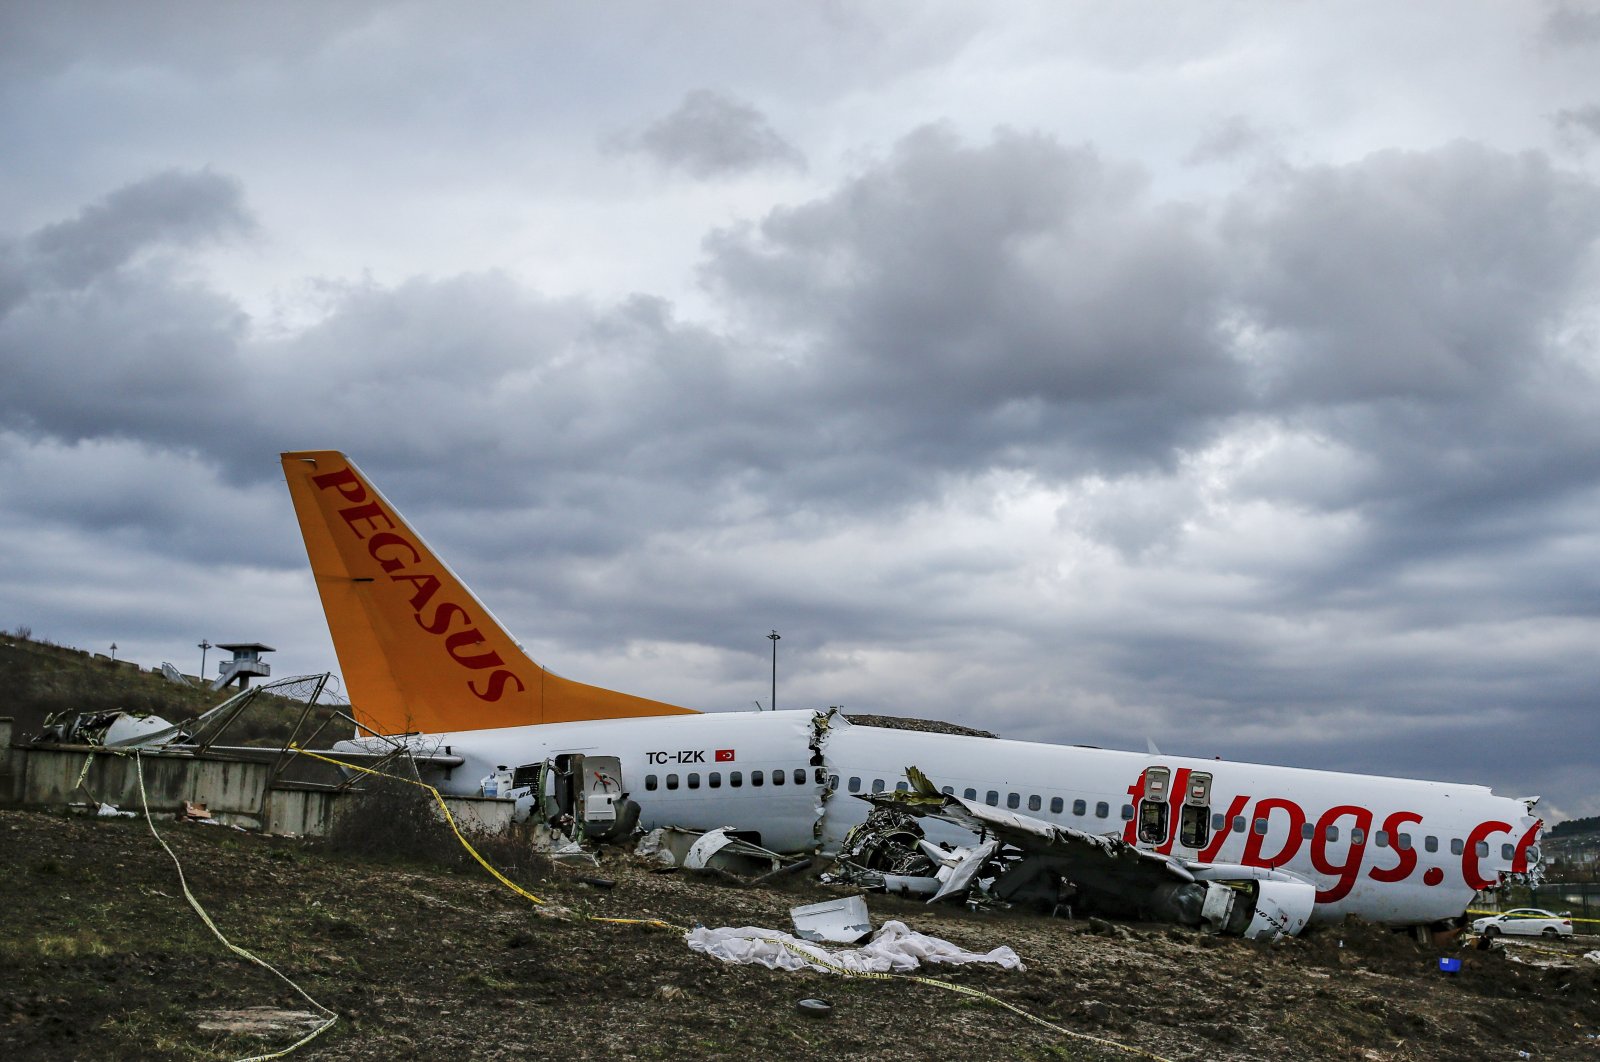 Laporan ahli menyalahkan otoritas bandara atas kecelakaan pesawat Istanbul